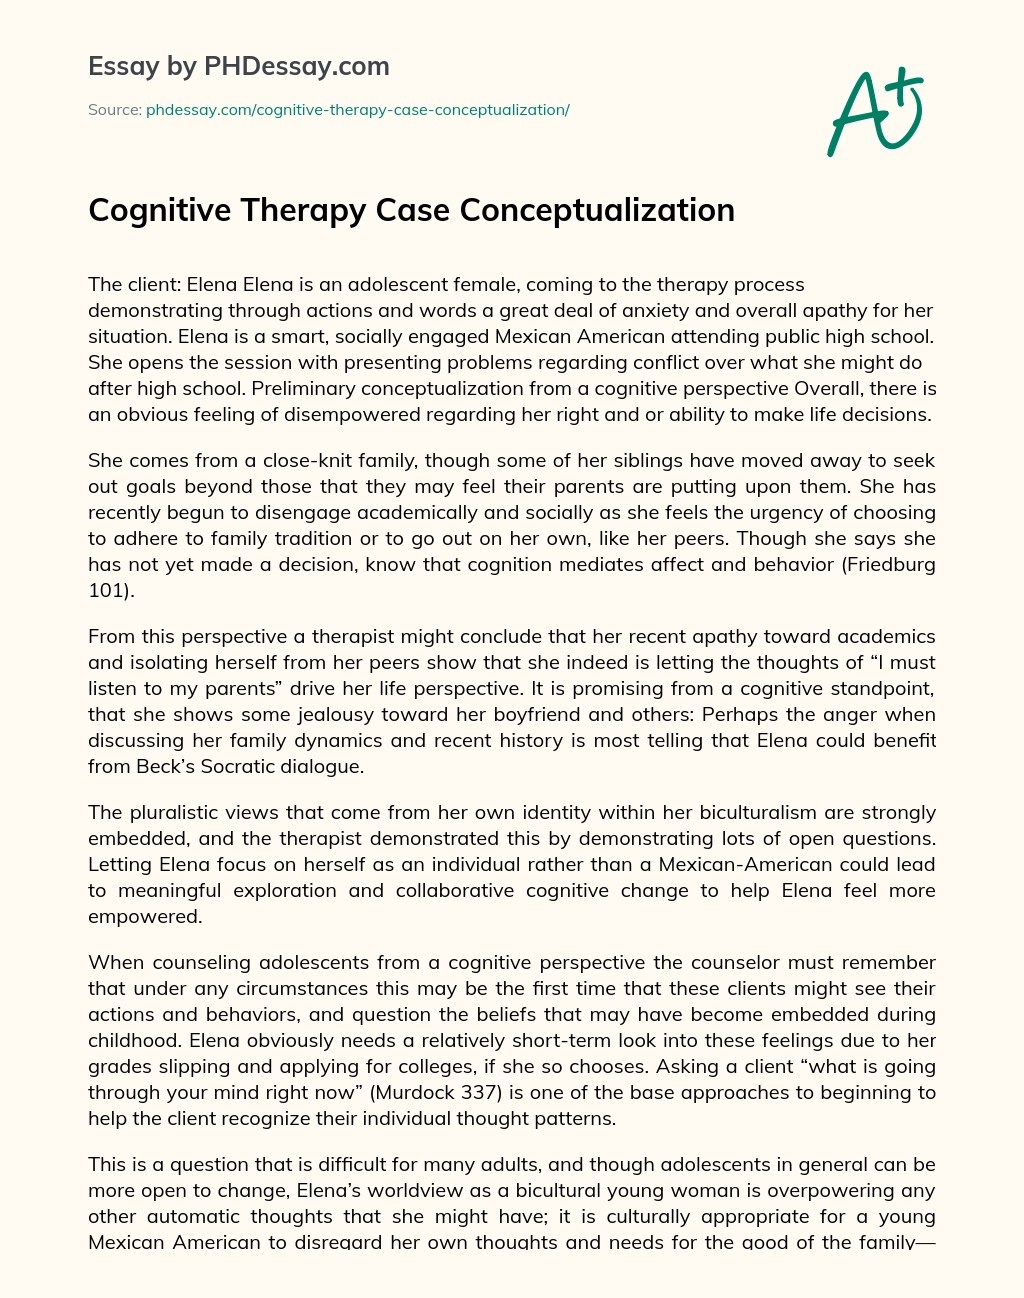 Cognitive Therapy Case Conceptualization essay